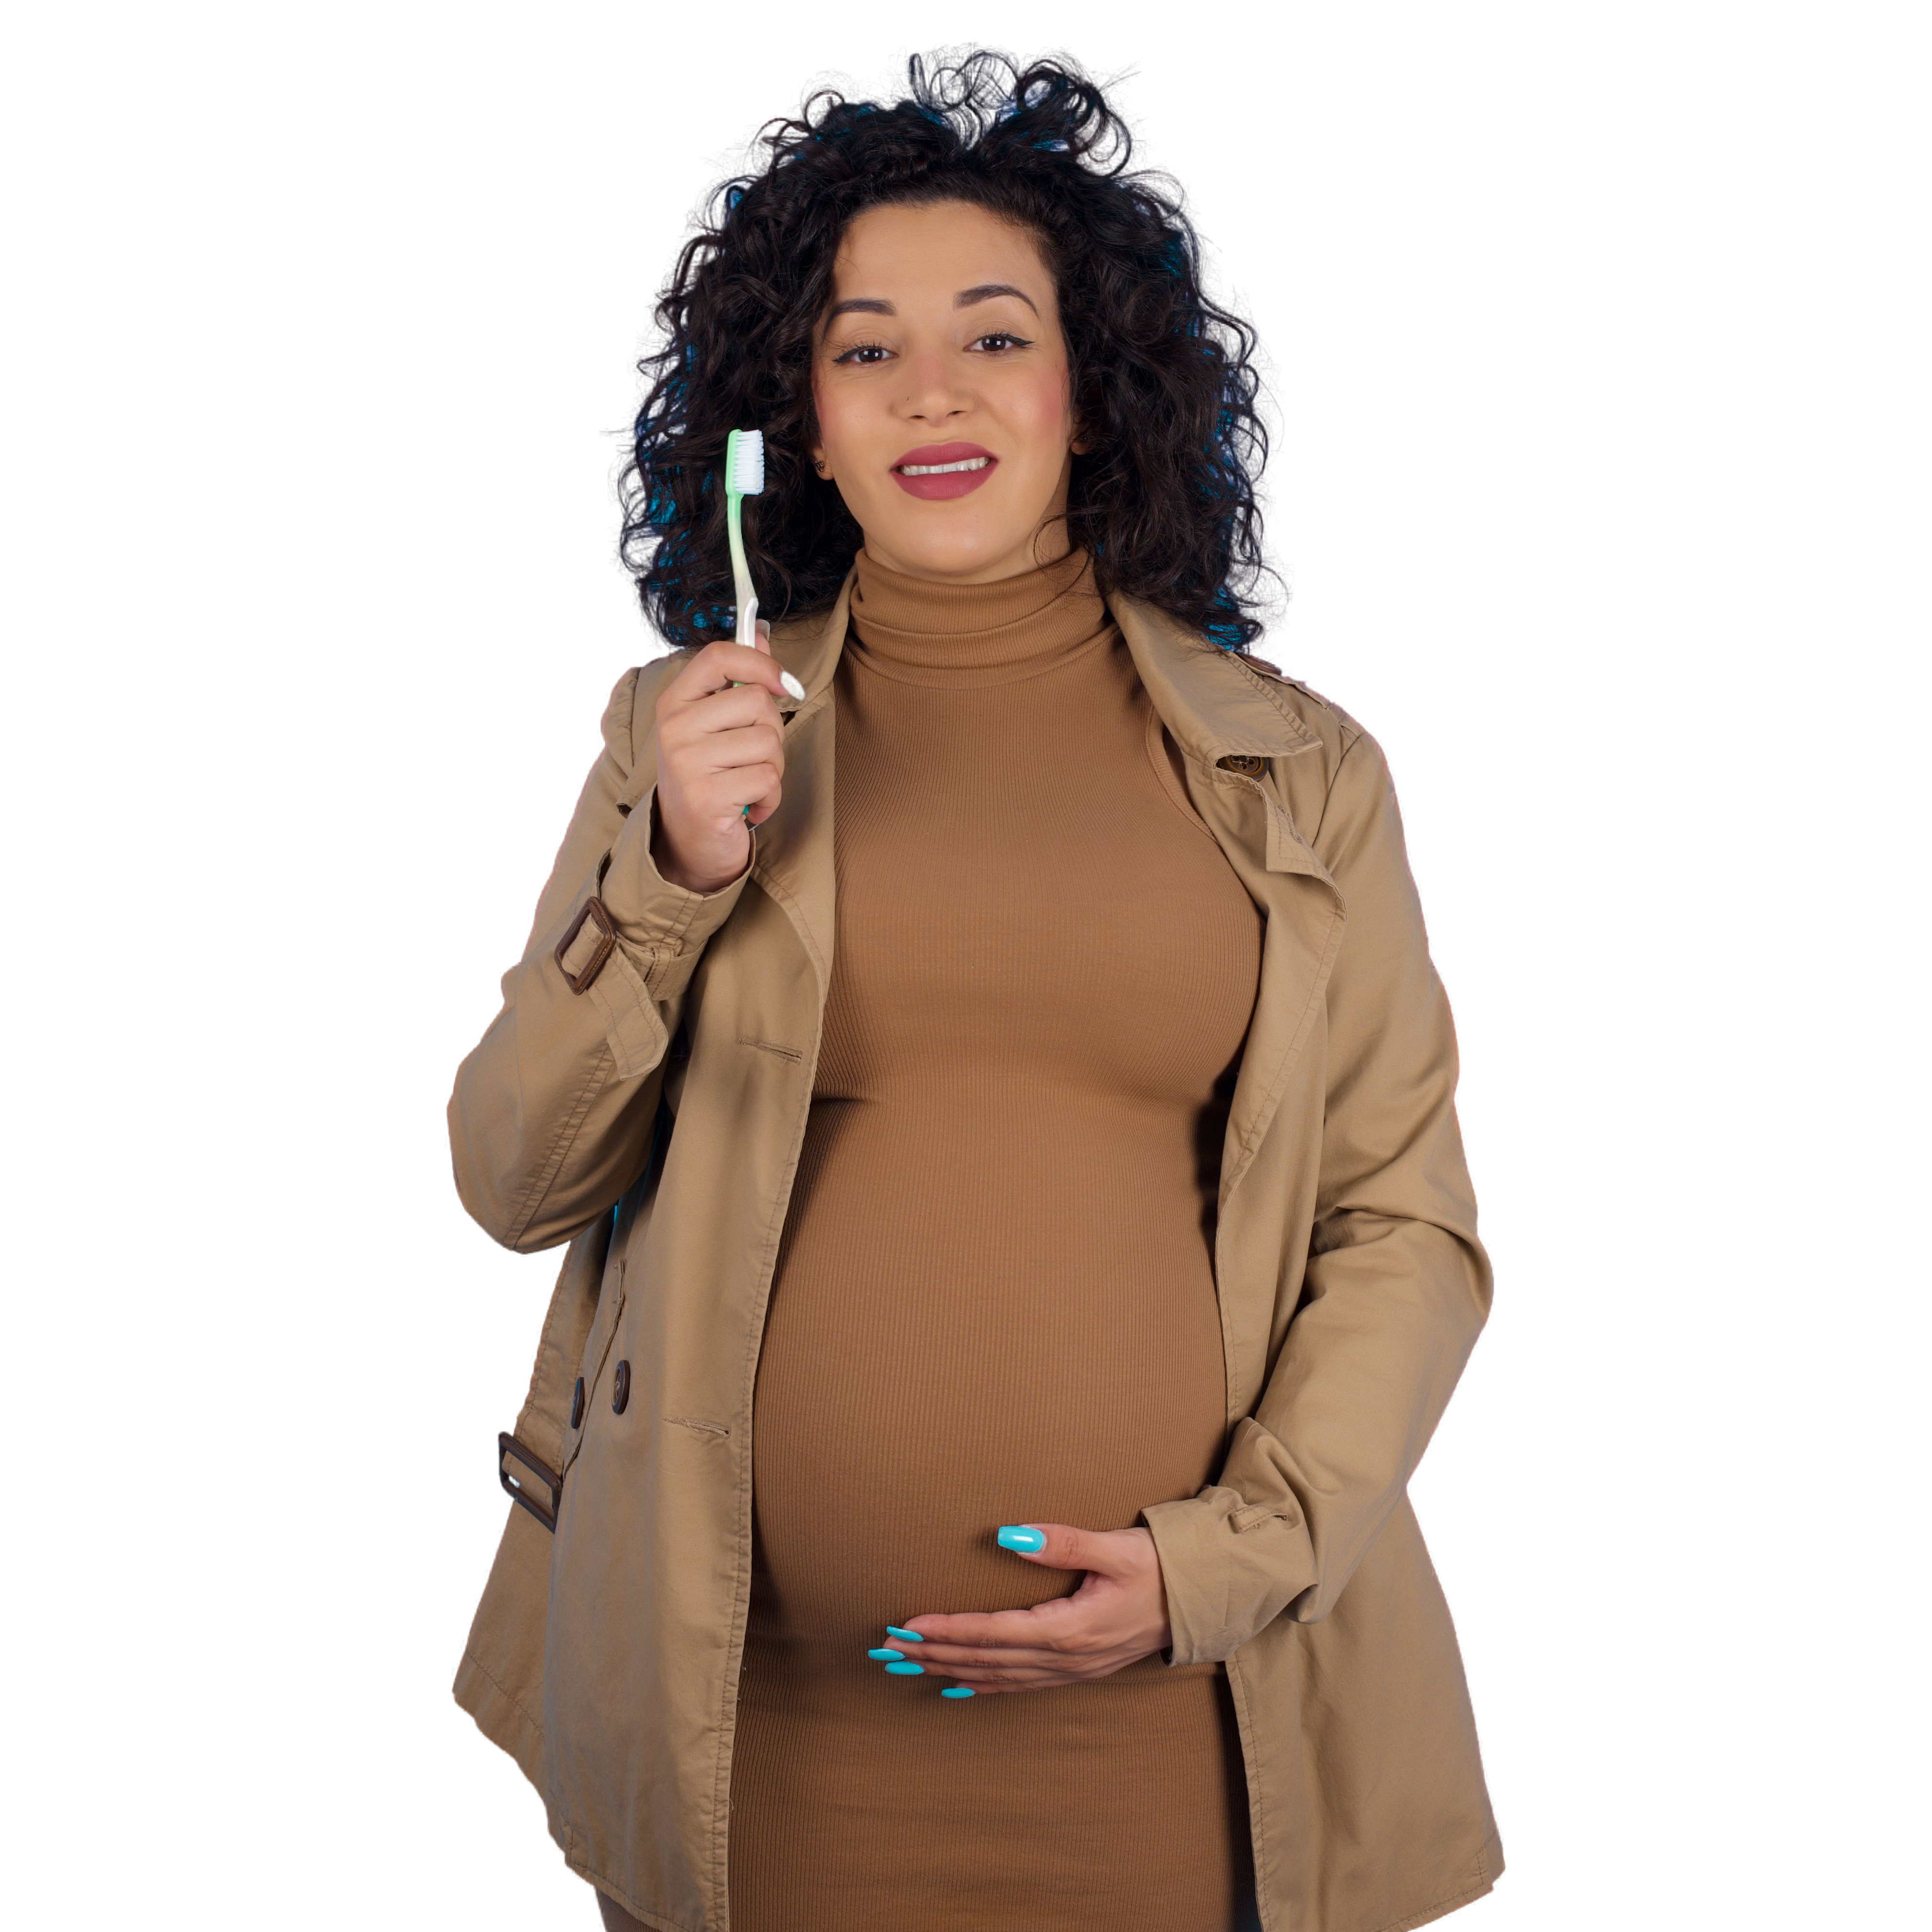 Pregnant Black woman brushing teeth